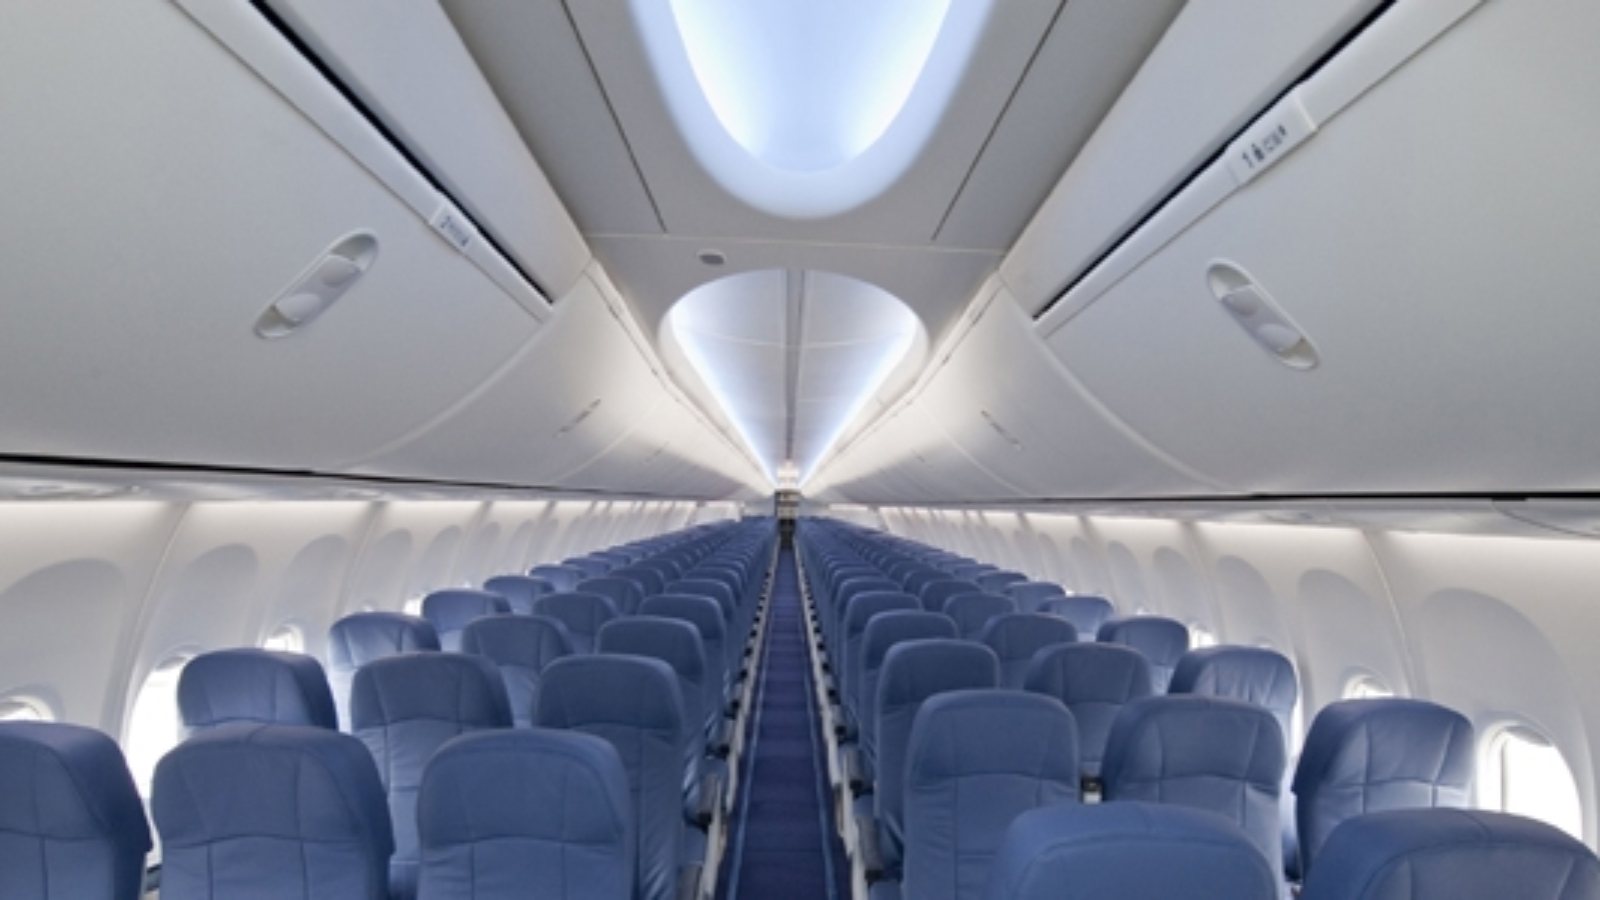 Boeing-737-Sky-interior